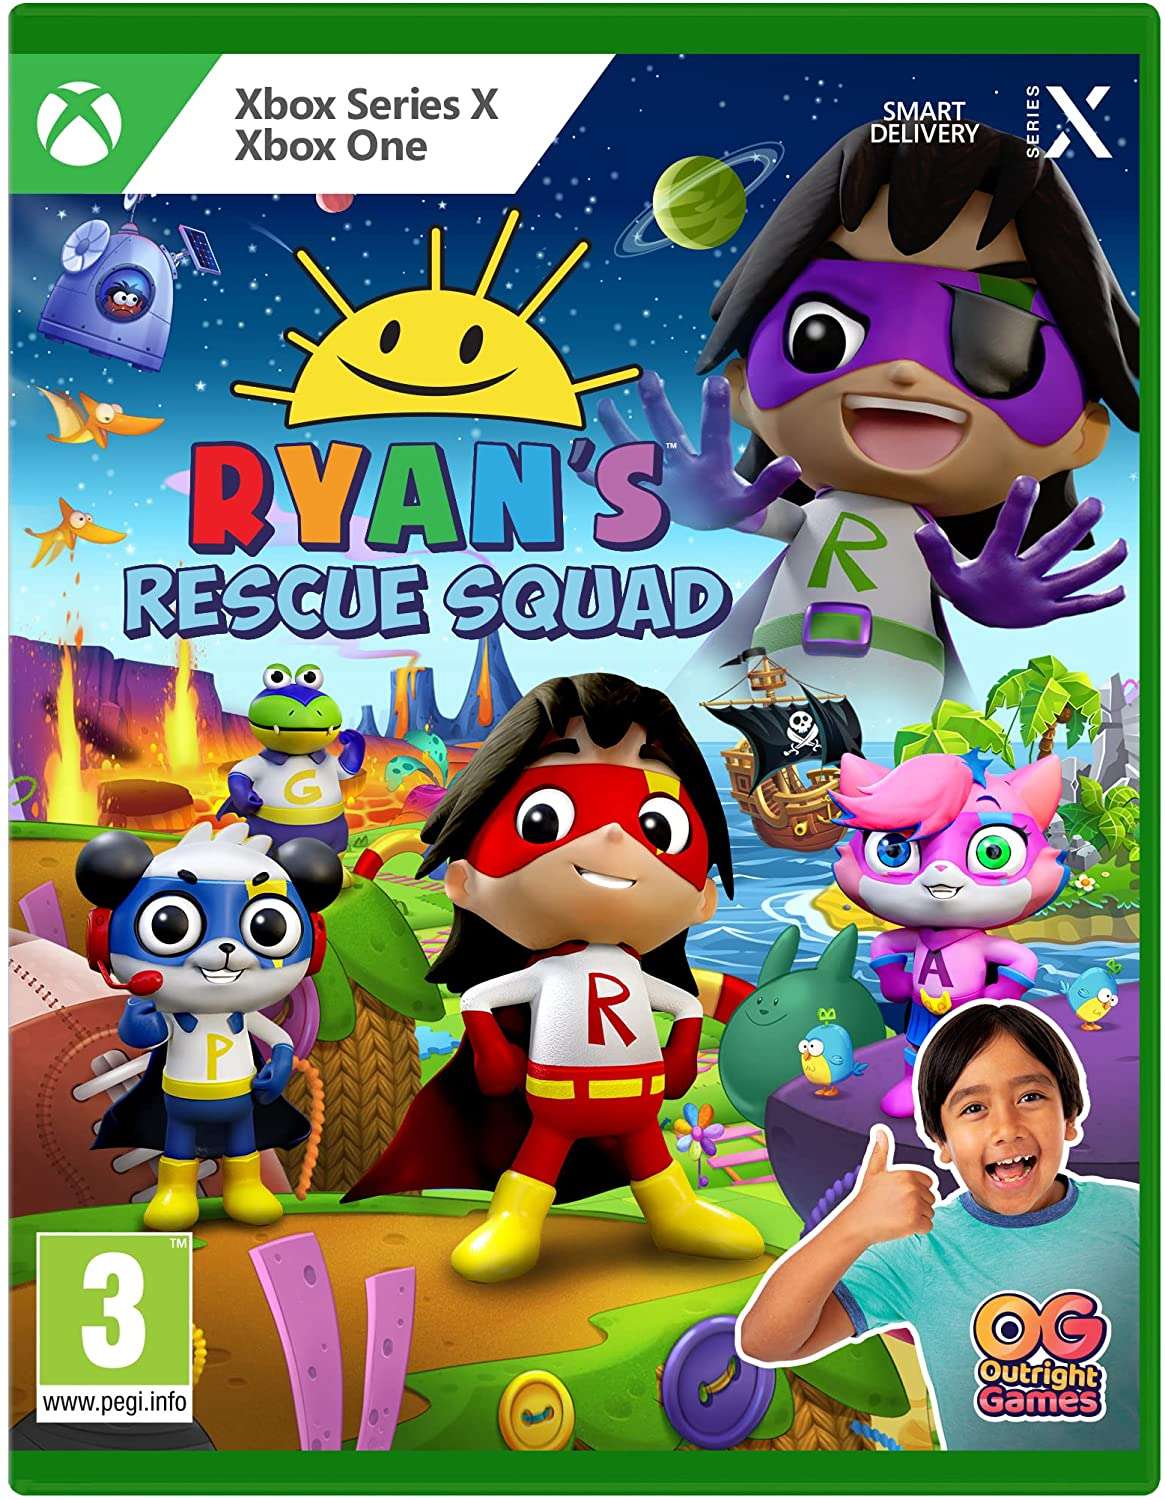 Ryans Rescue Squad for XBOXONE to buy